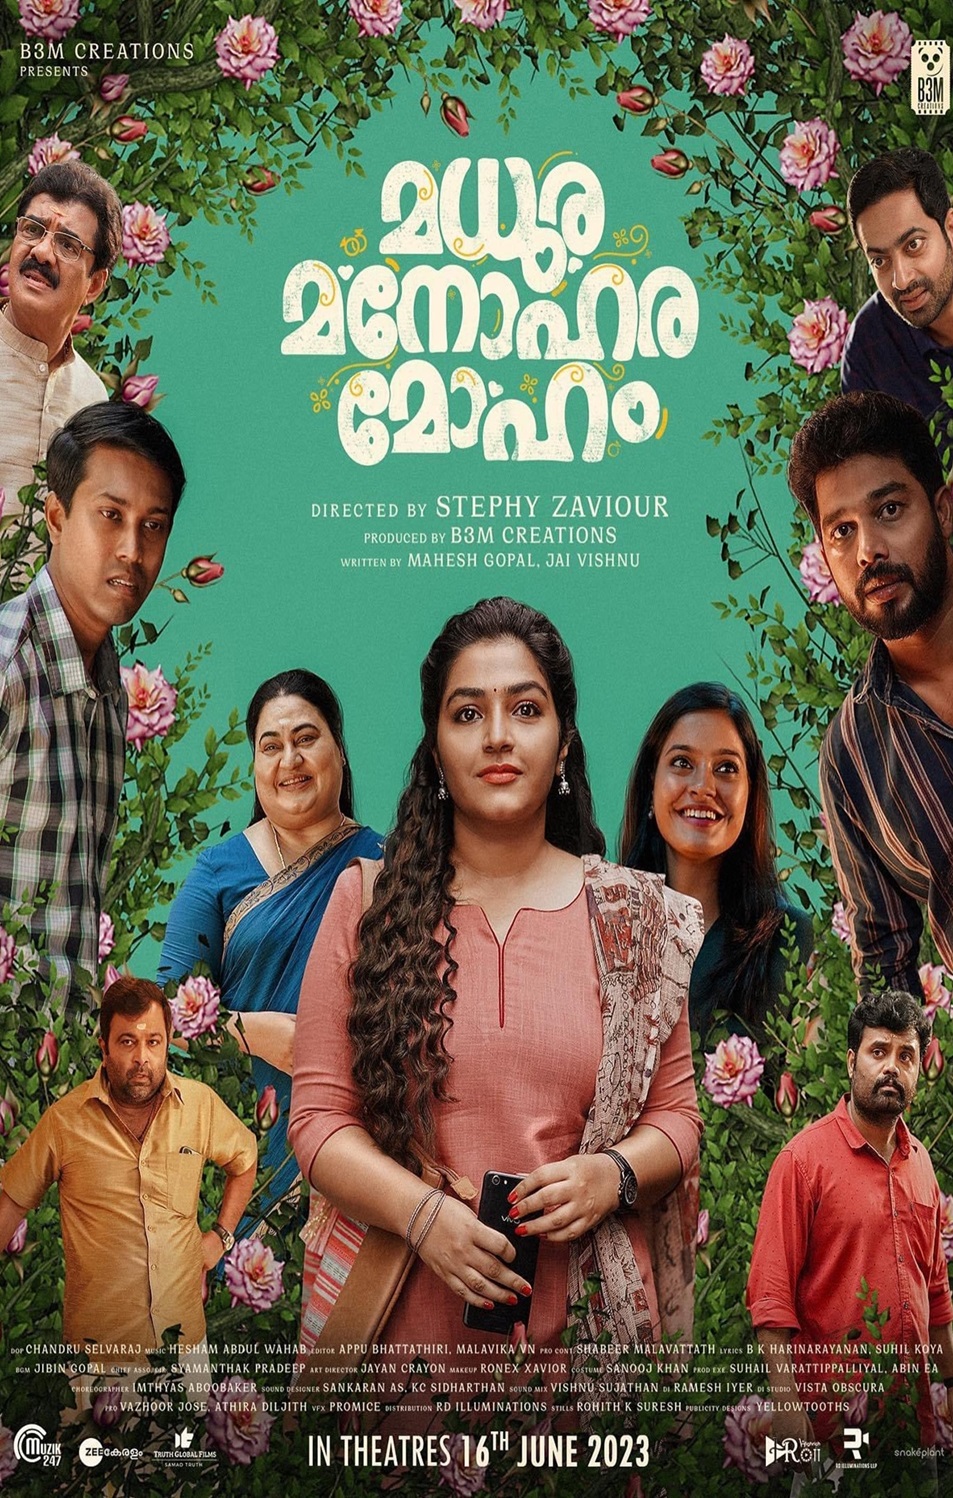 Madhura Manohara Moham 2023 Tamil Dubbed Drama Movie Online